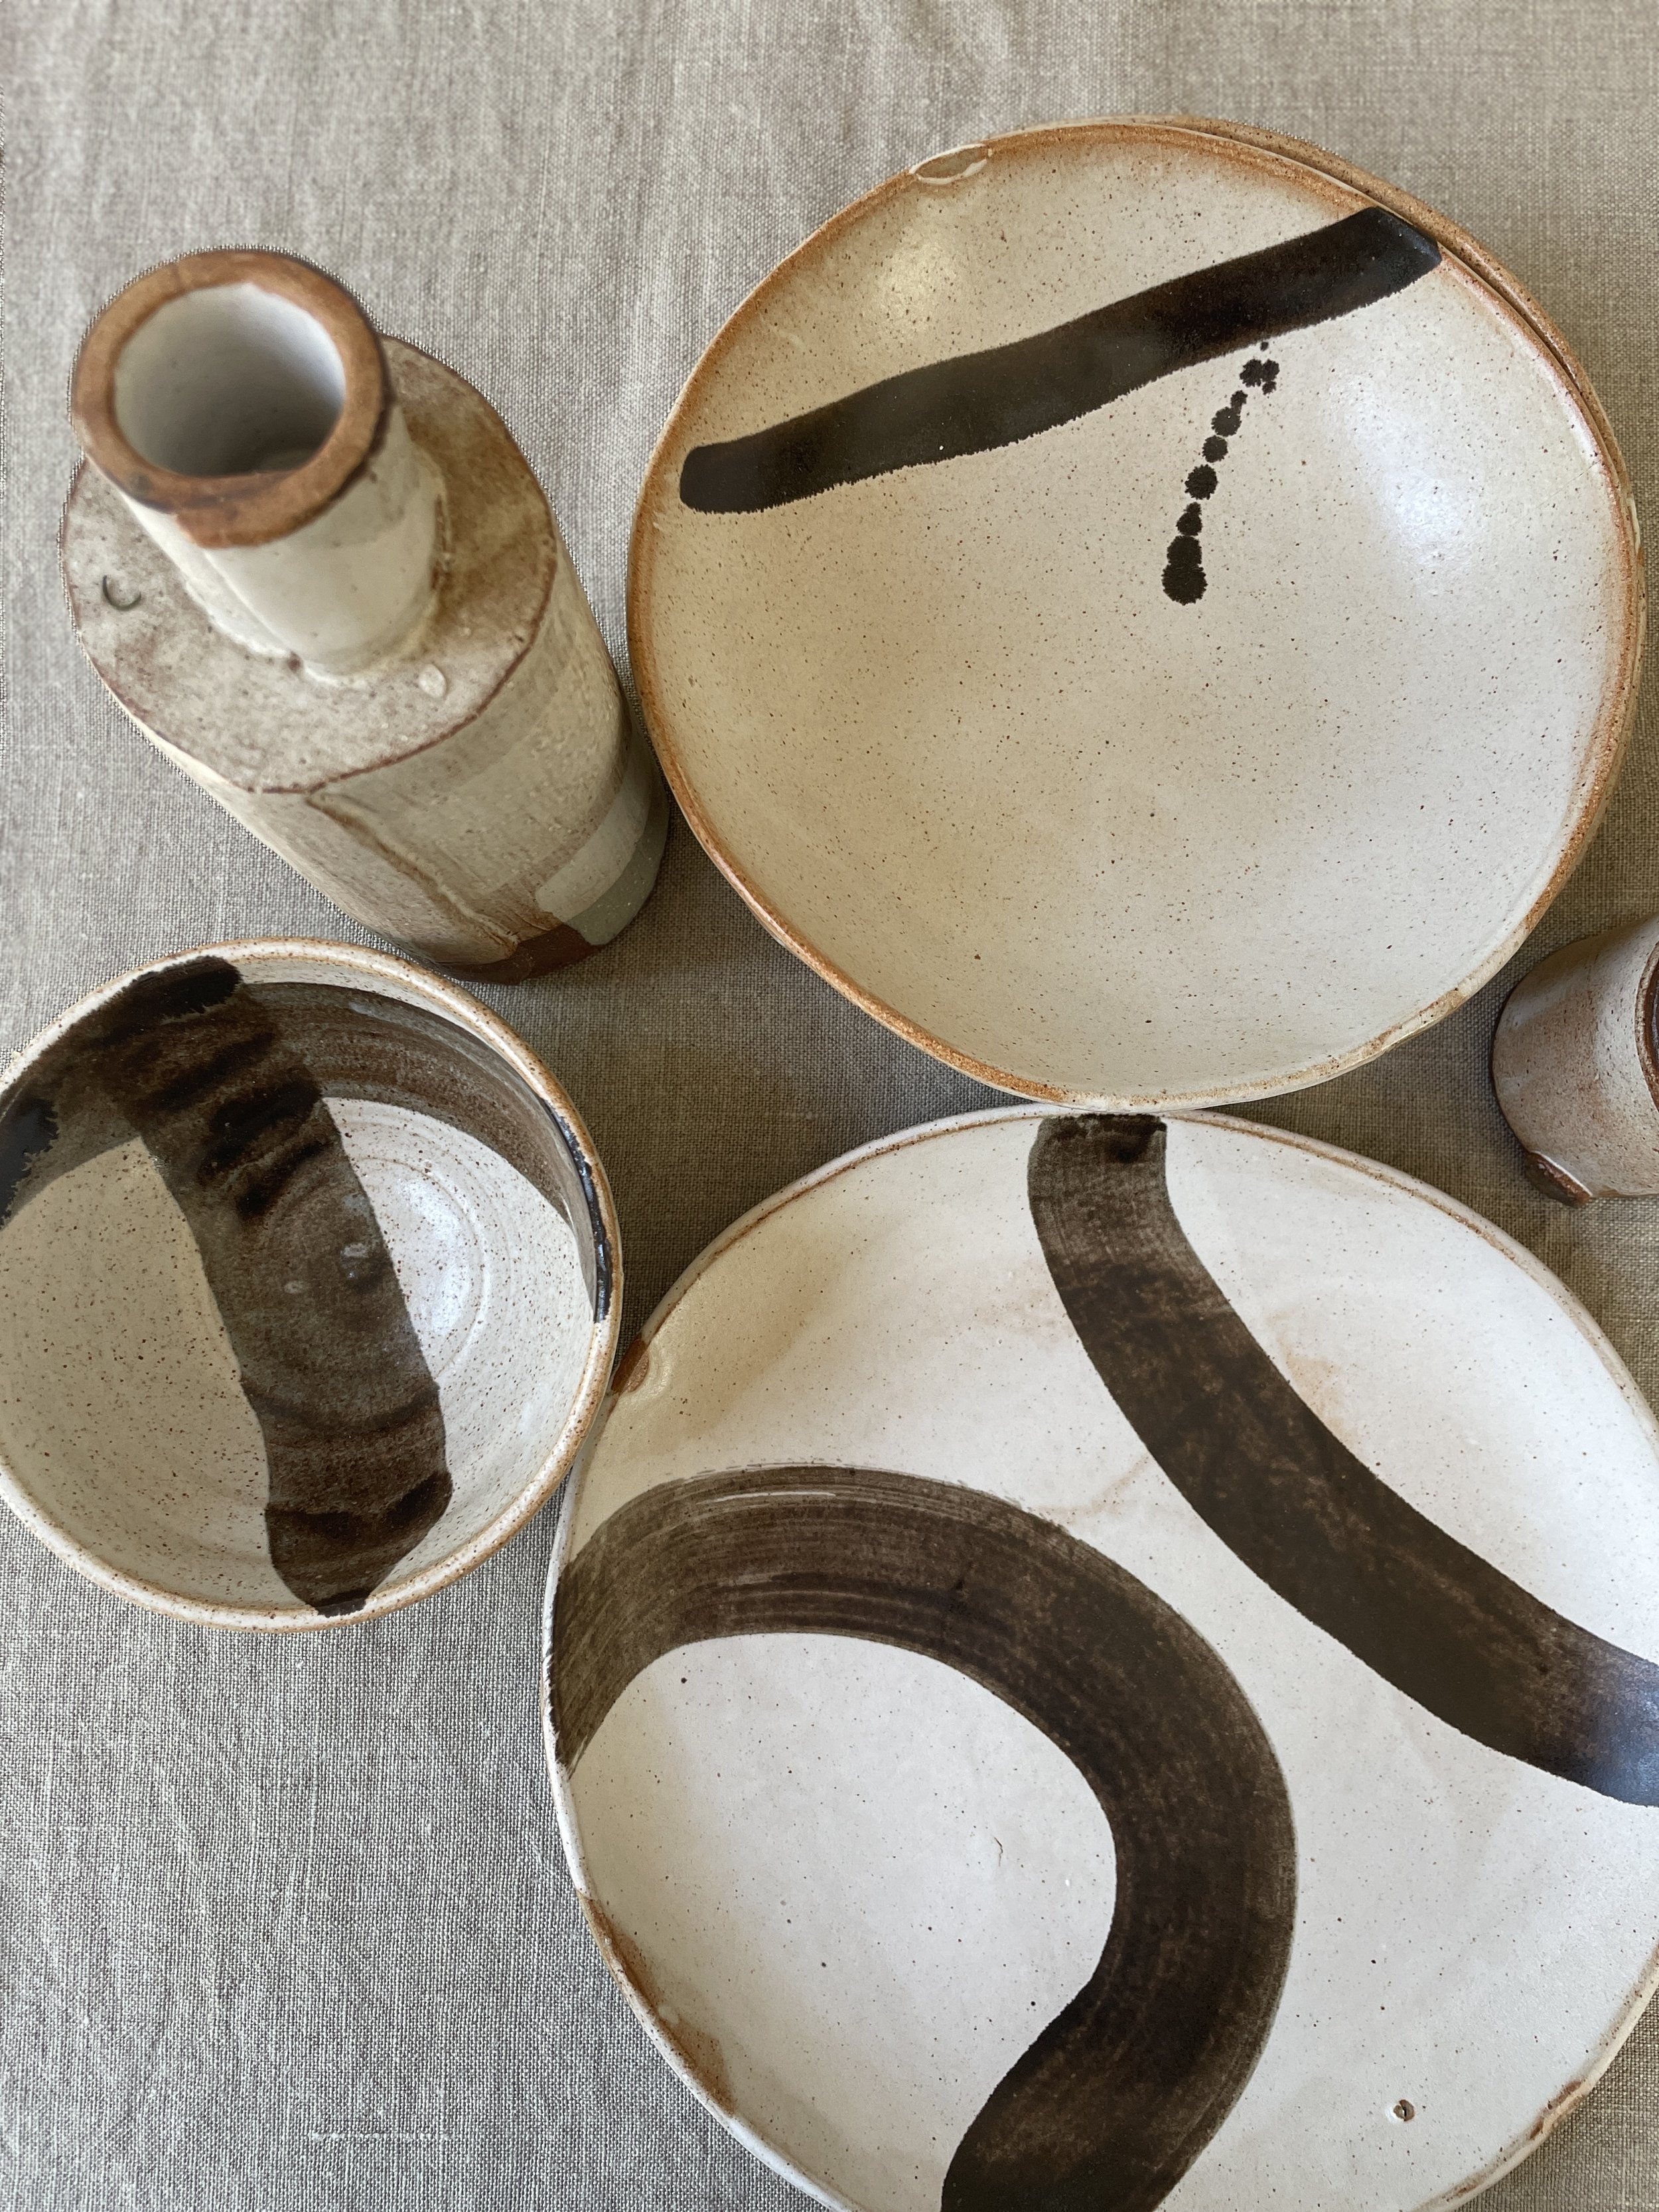 Earthy ceramics made by Nicola Gillis